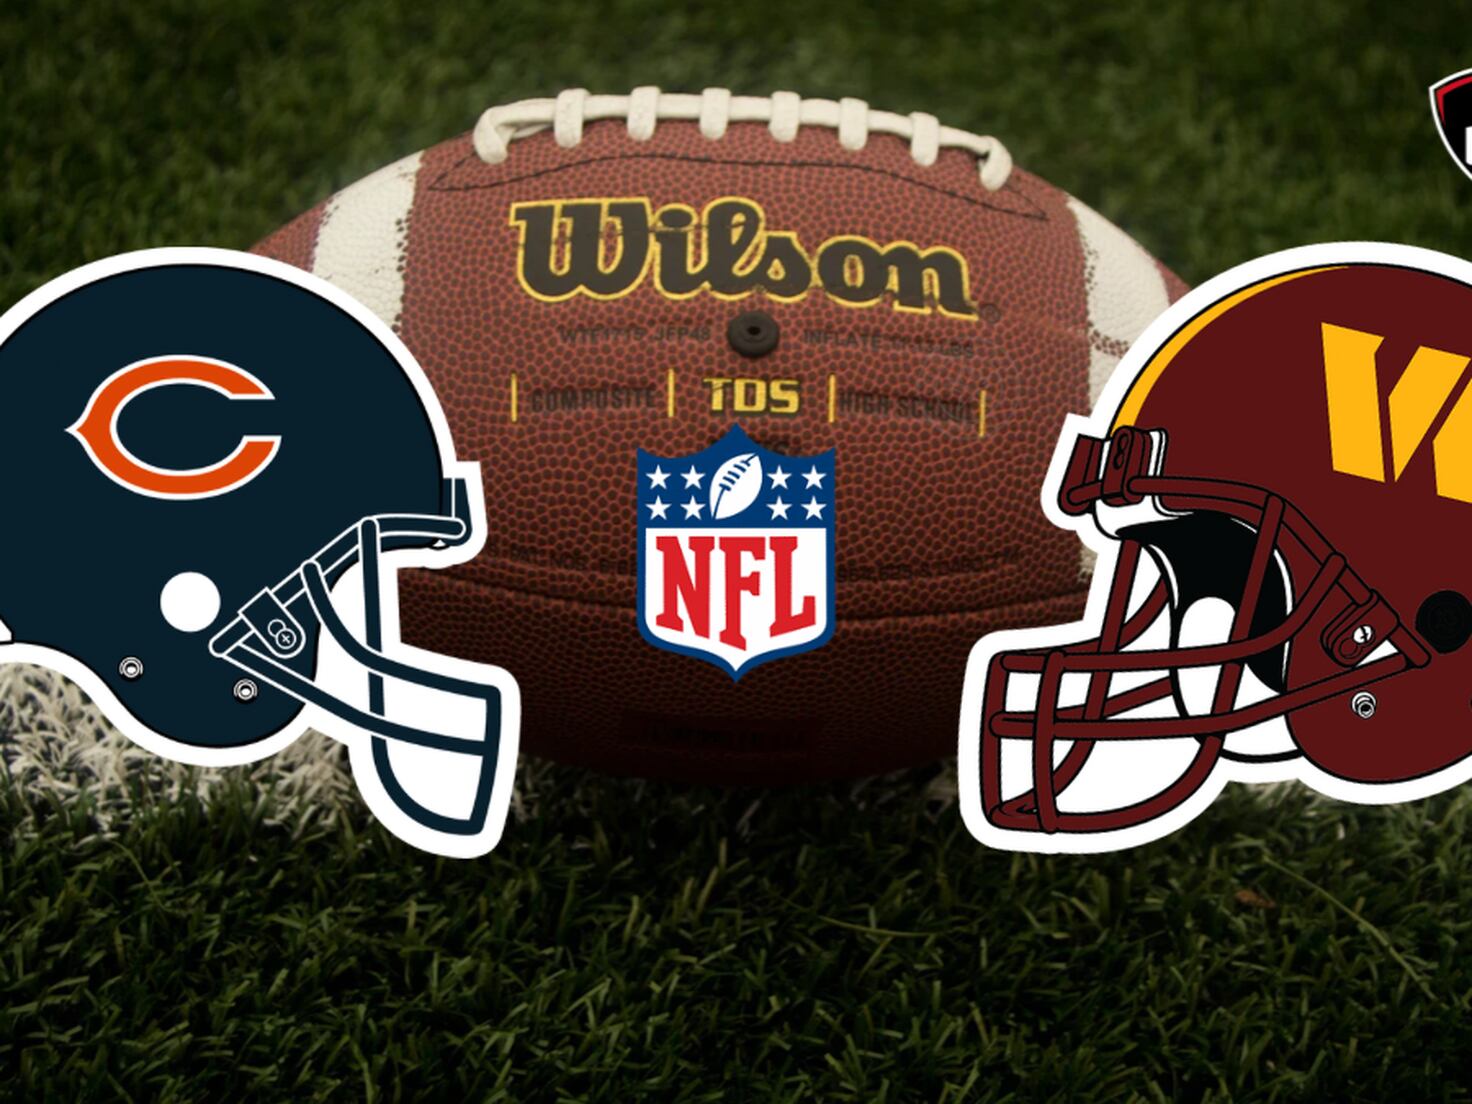 Washington Commanders vs. Chicago Bears NFL Week 6 schedule, TV